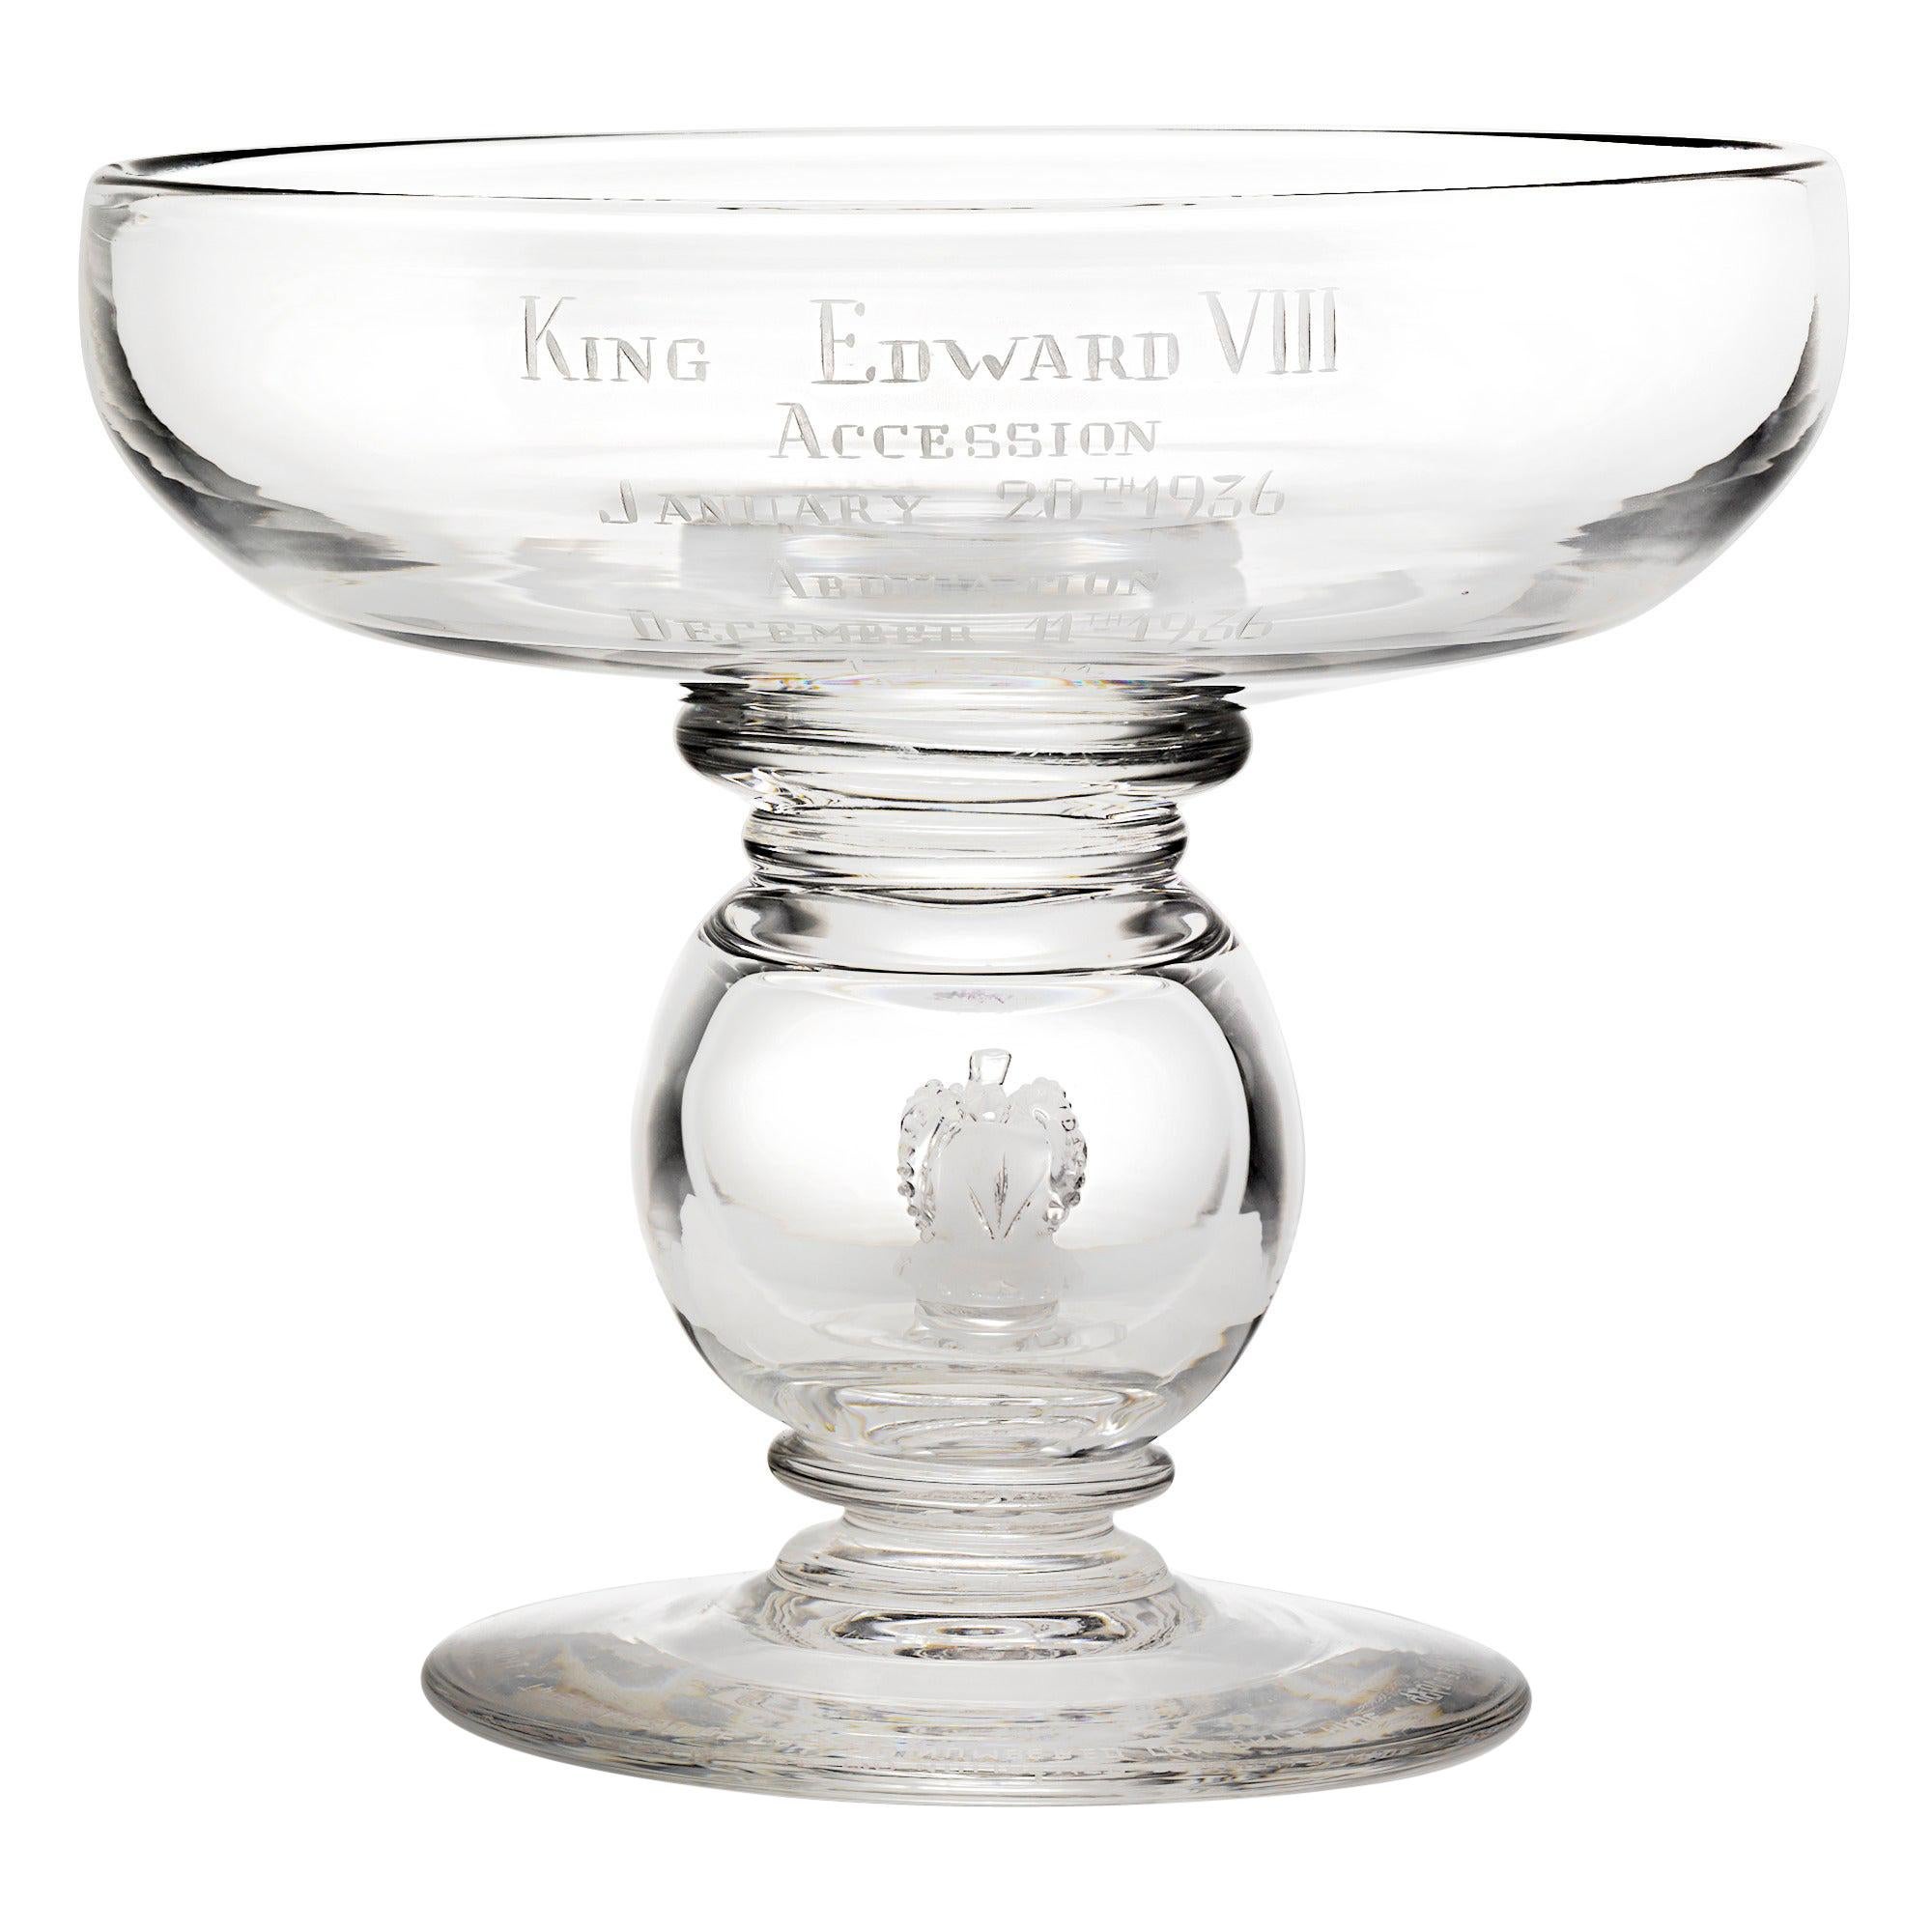 King Edward VIII Abdication Cup